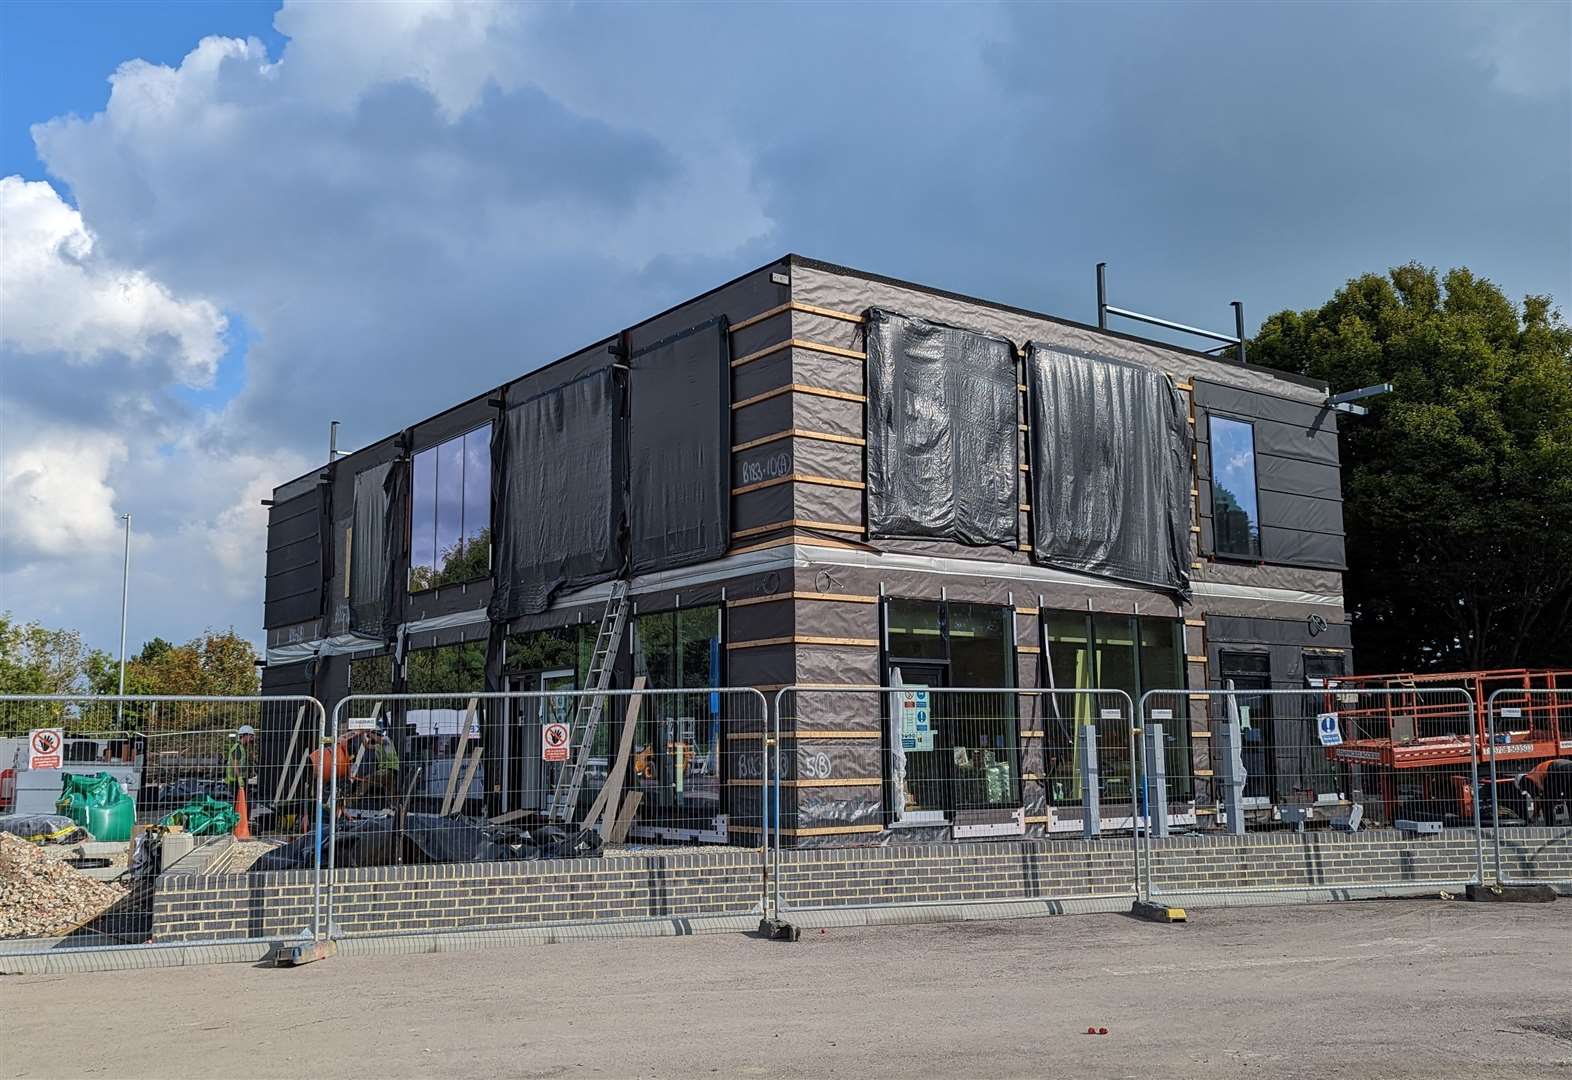 Restoran McDonald’s baru di tempat parkir Tesco di Cheriton, Folkestone muncul ‘entah dari mana’